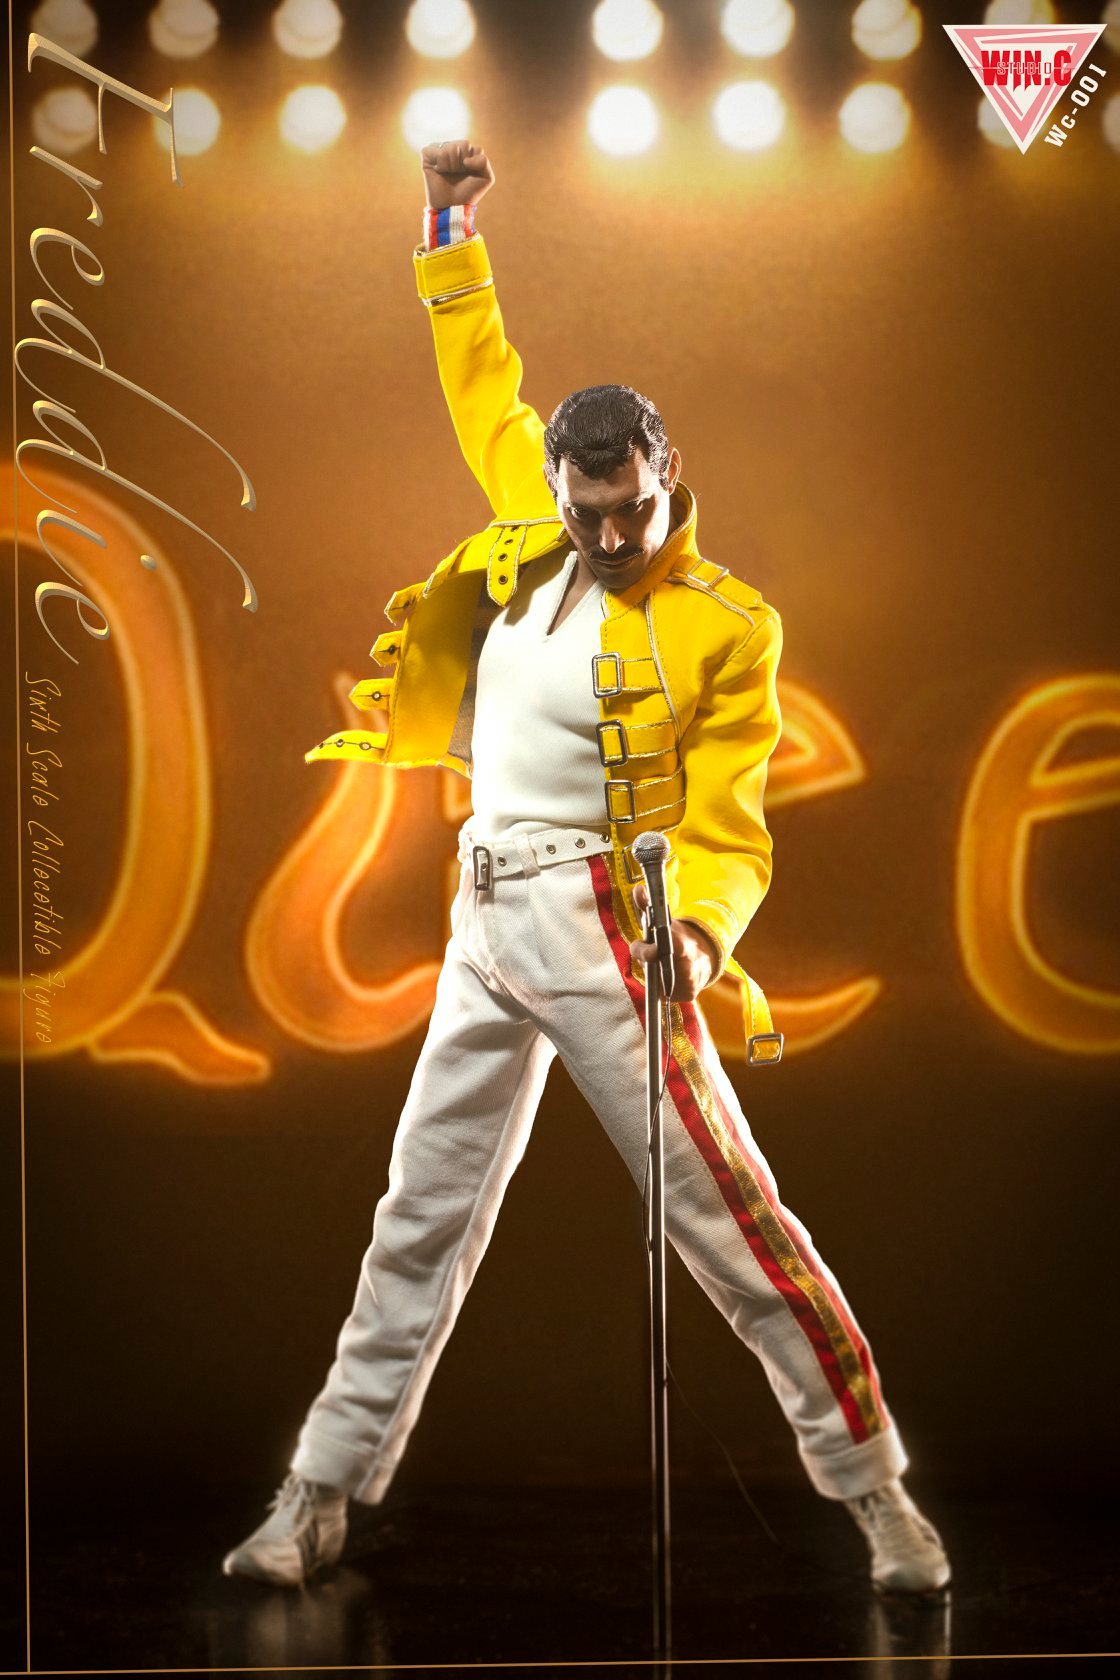 Win.C Studio: Freddie Mercury Set